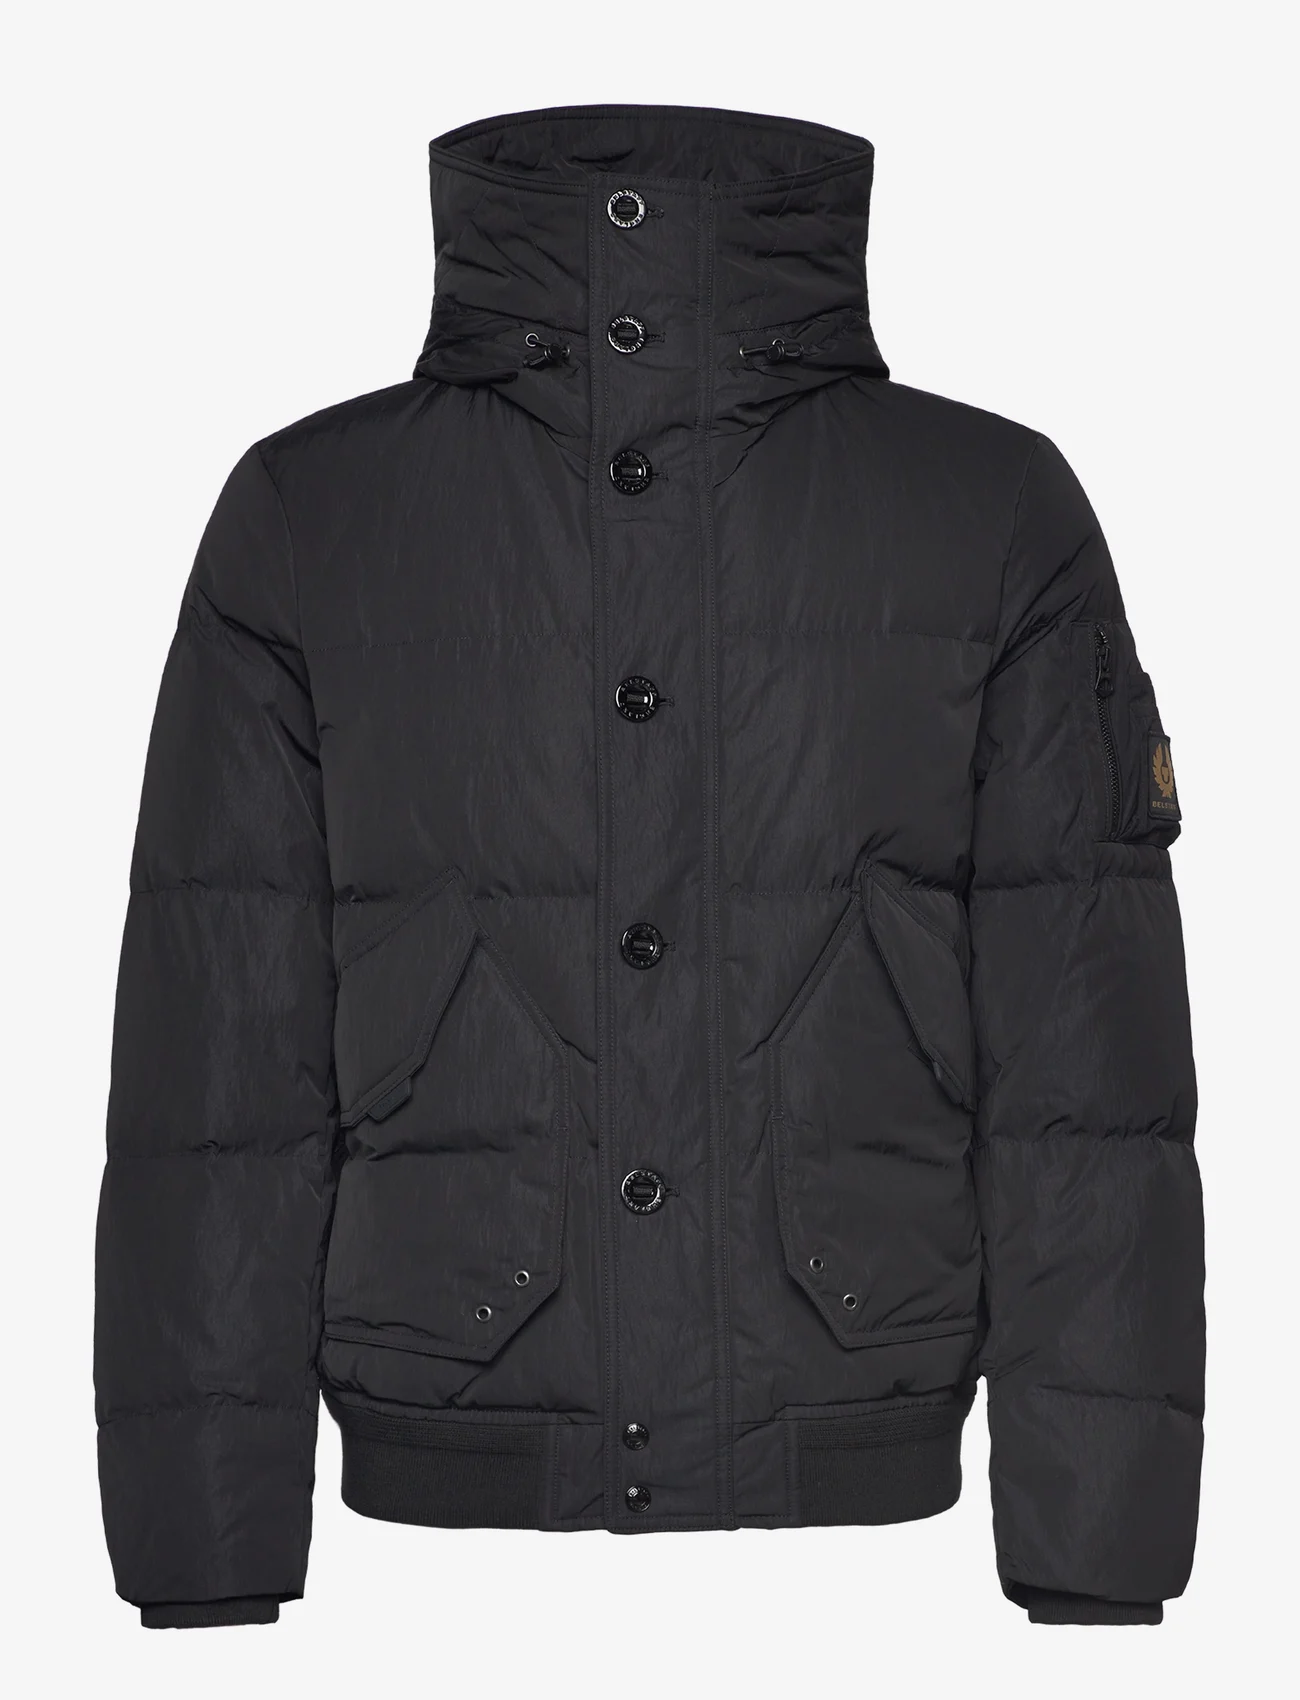 Belstaff - RADAR JACKET - winter jackets - black - 0